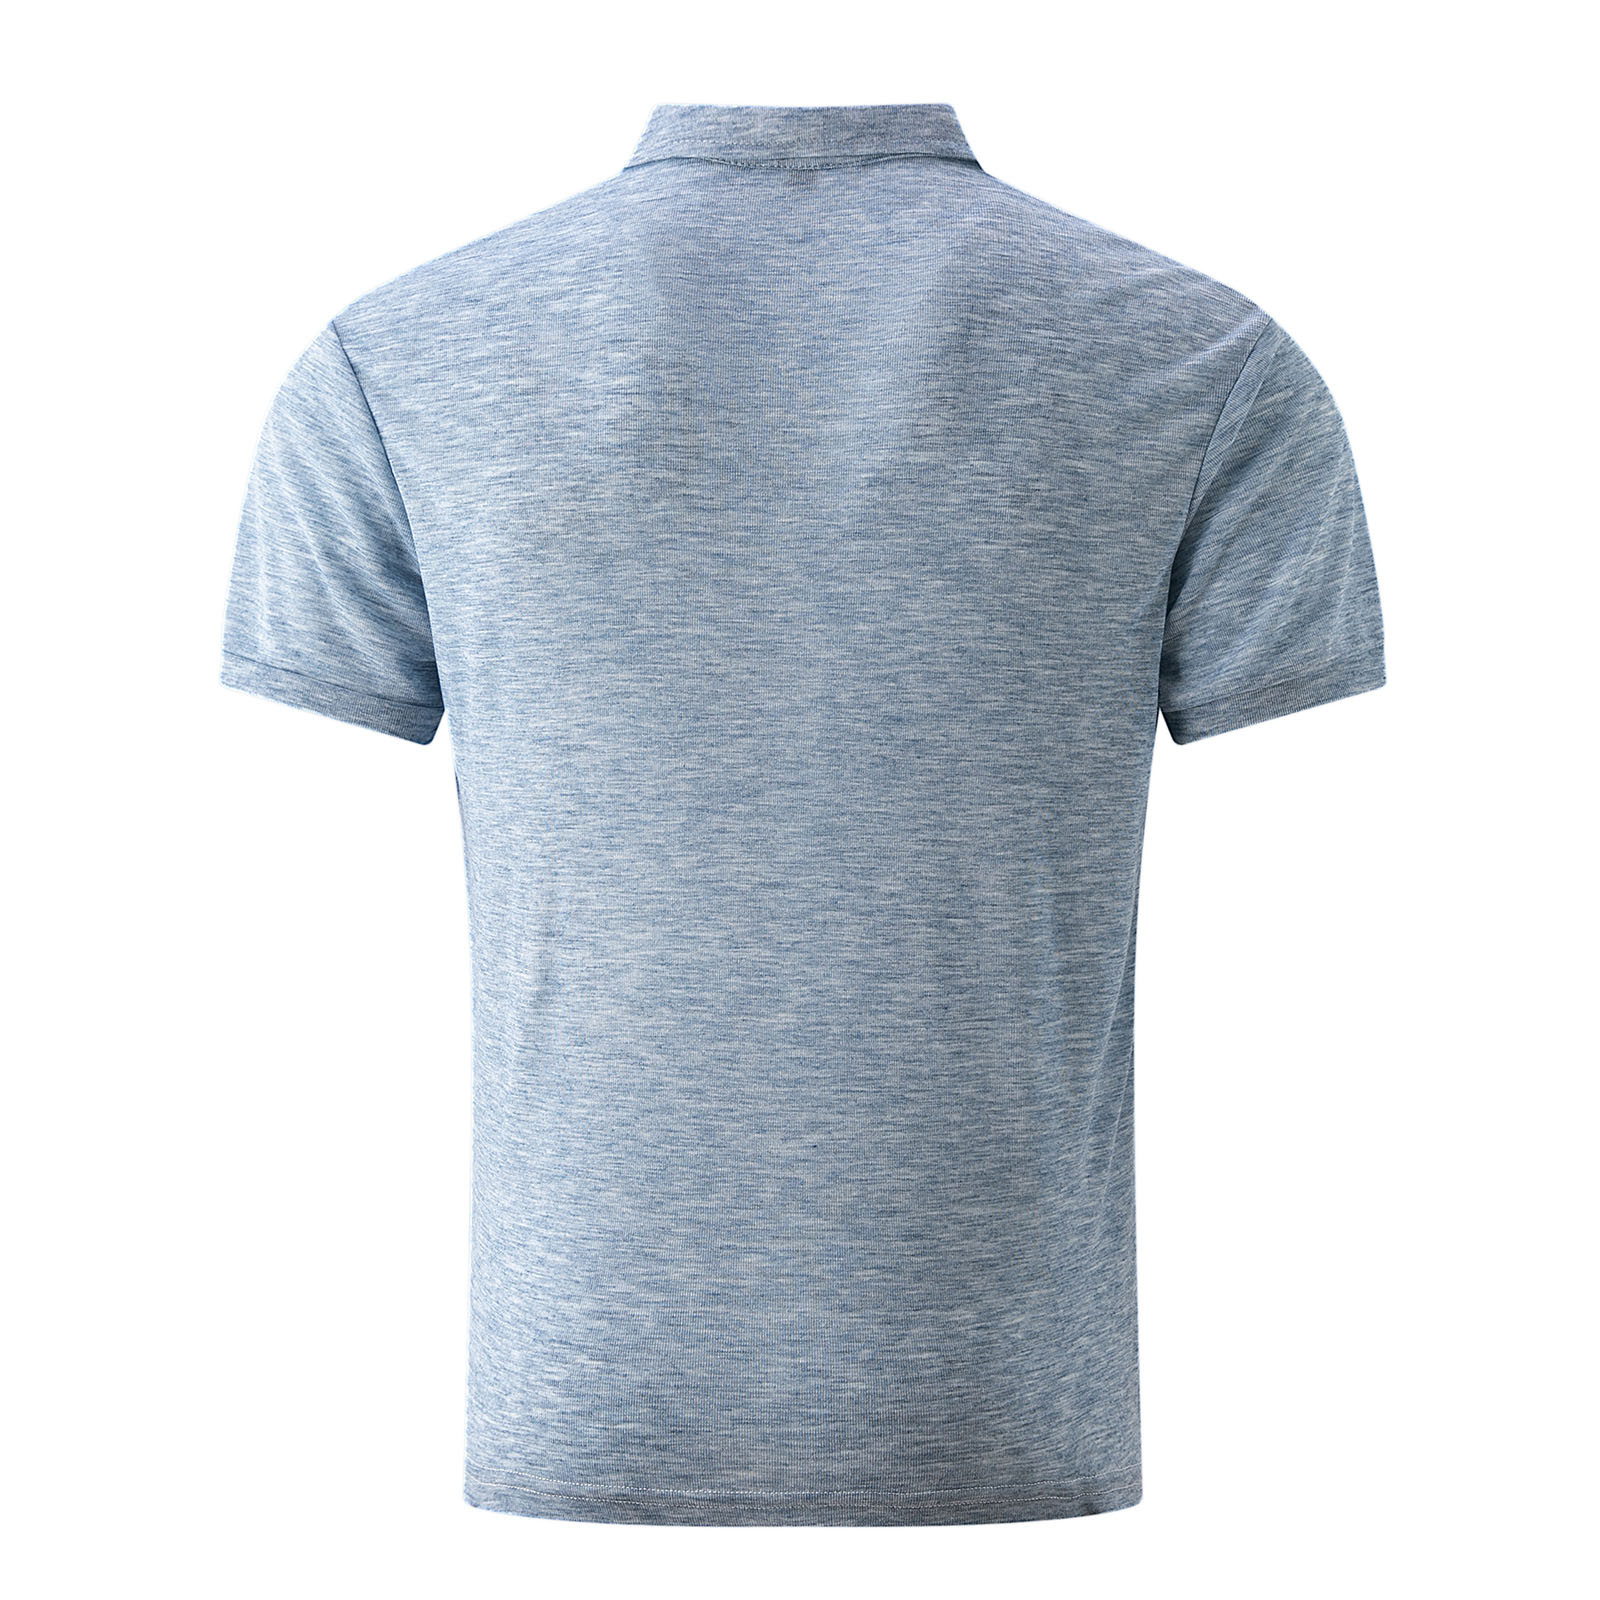 tklpehg Tshirts Shirts for Men Summer Business Basic Tops Lapel Zipper ...